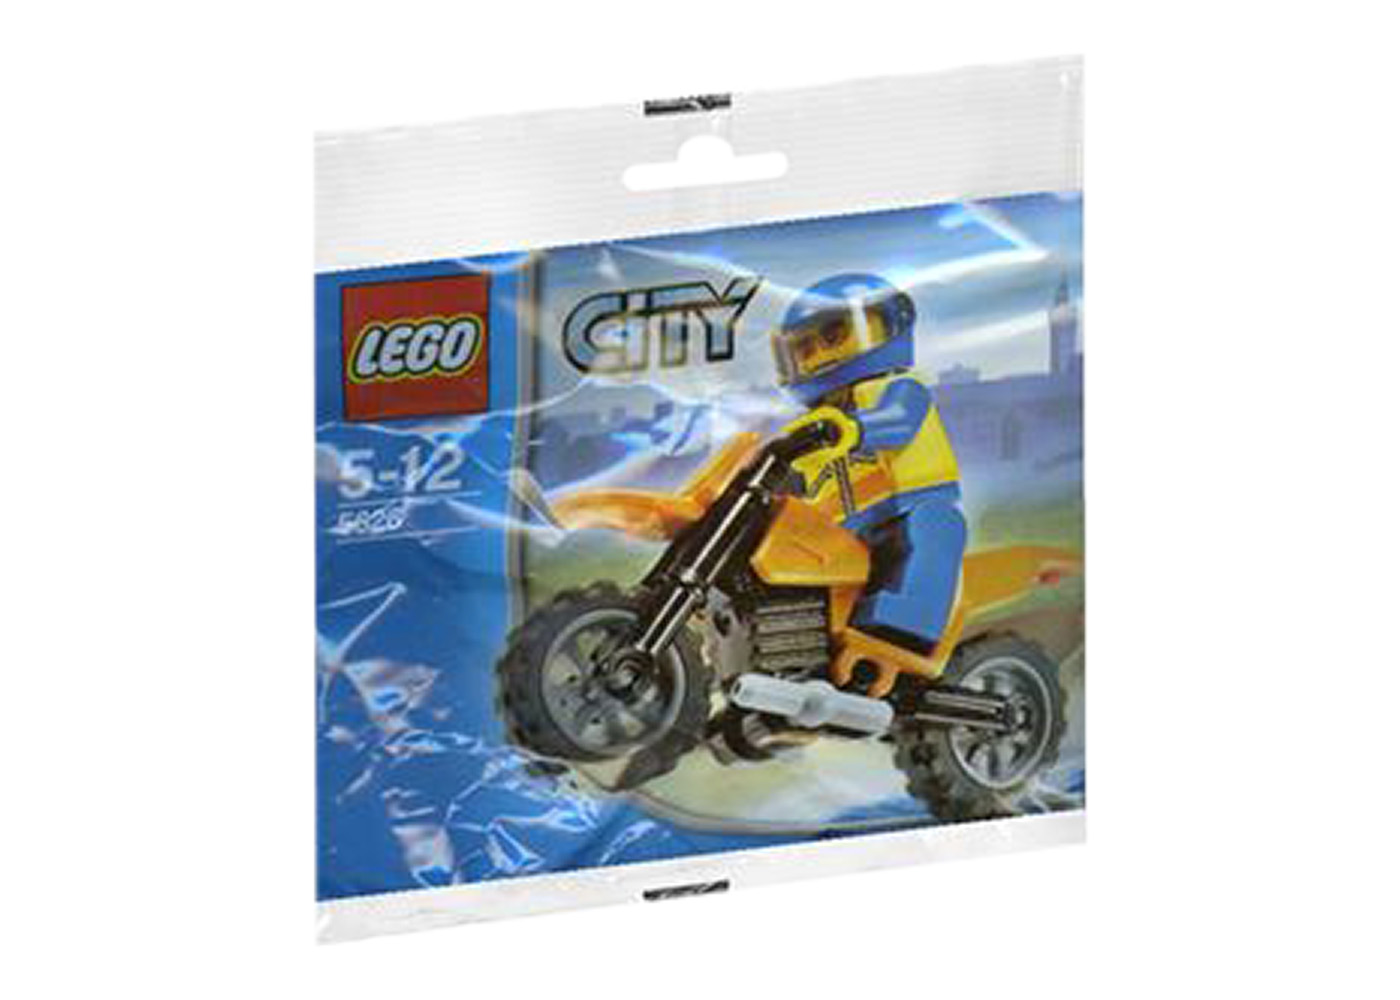 LEGO City Coast Guard Bike Set 5626 - CN